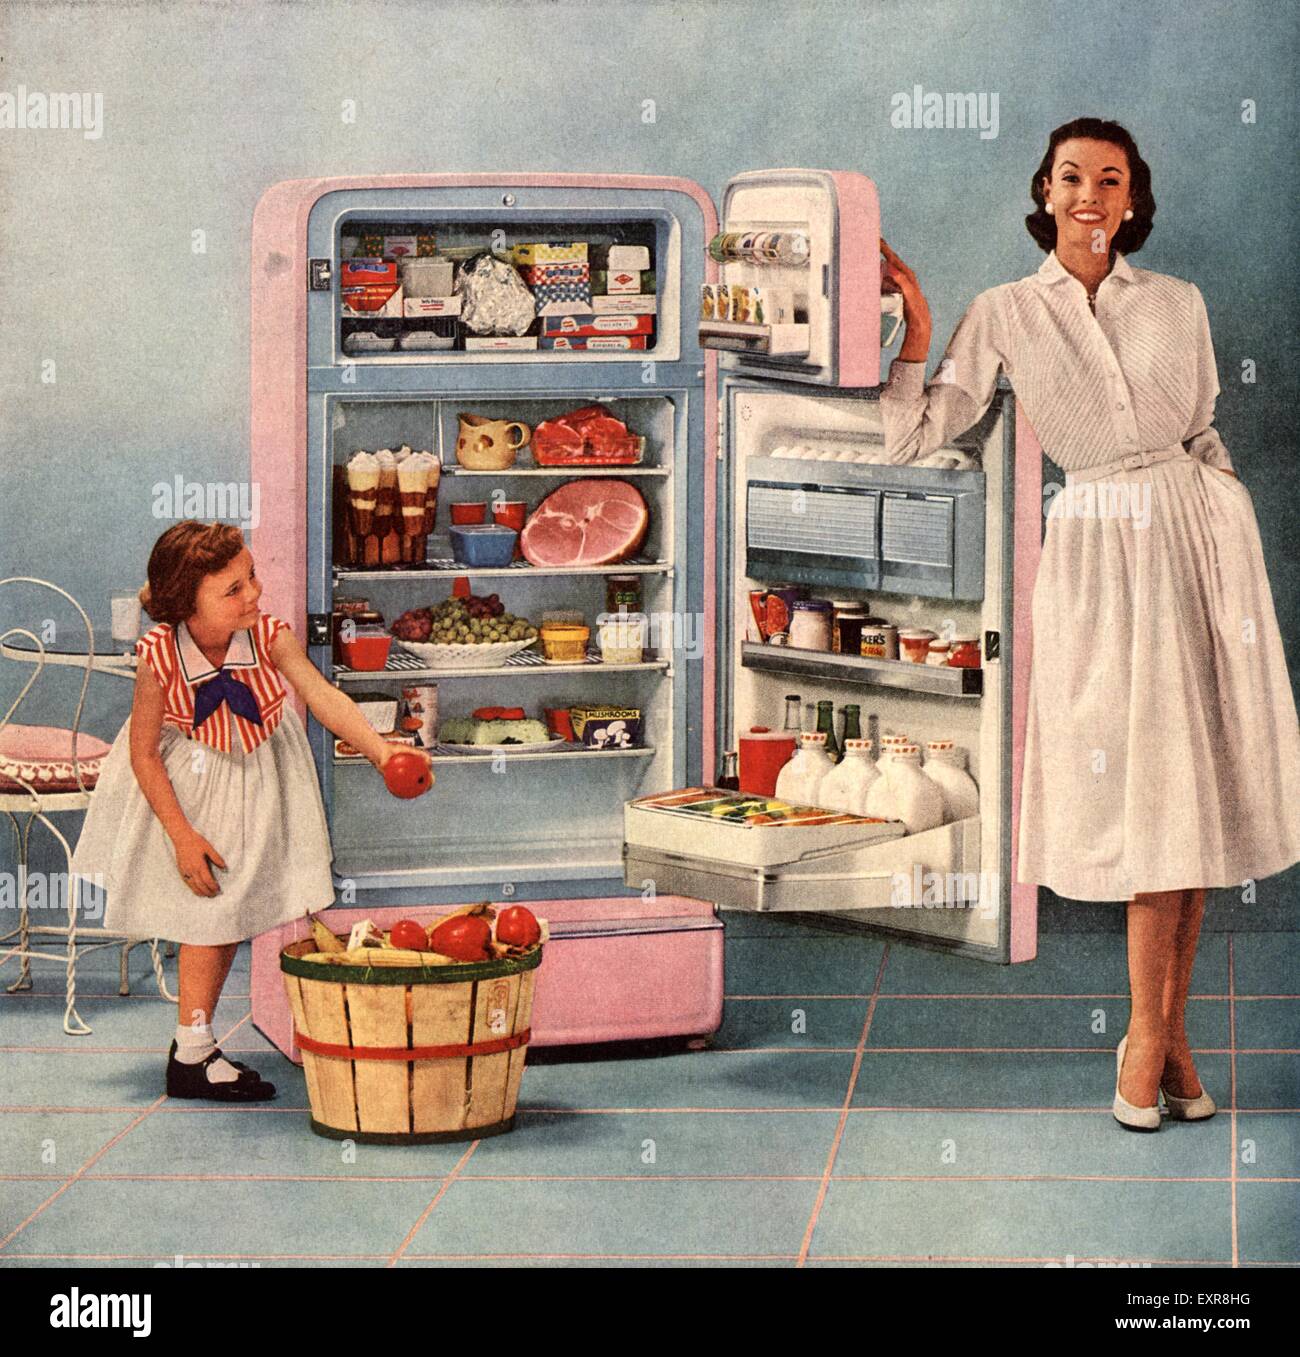 1950s USA Housewife with Fridge Magazine Advert Stock Photo